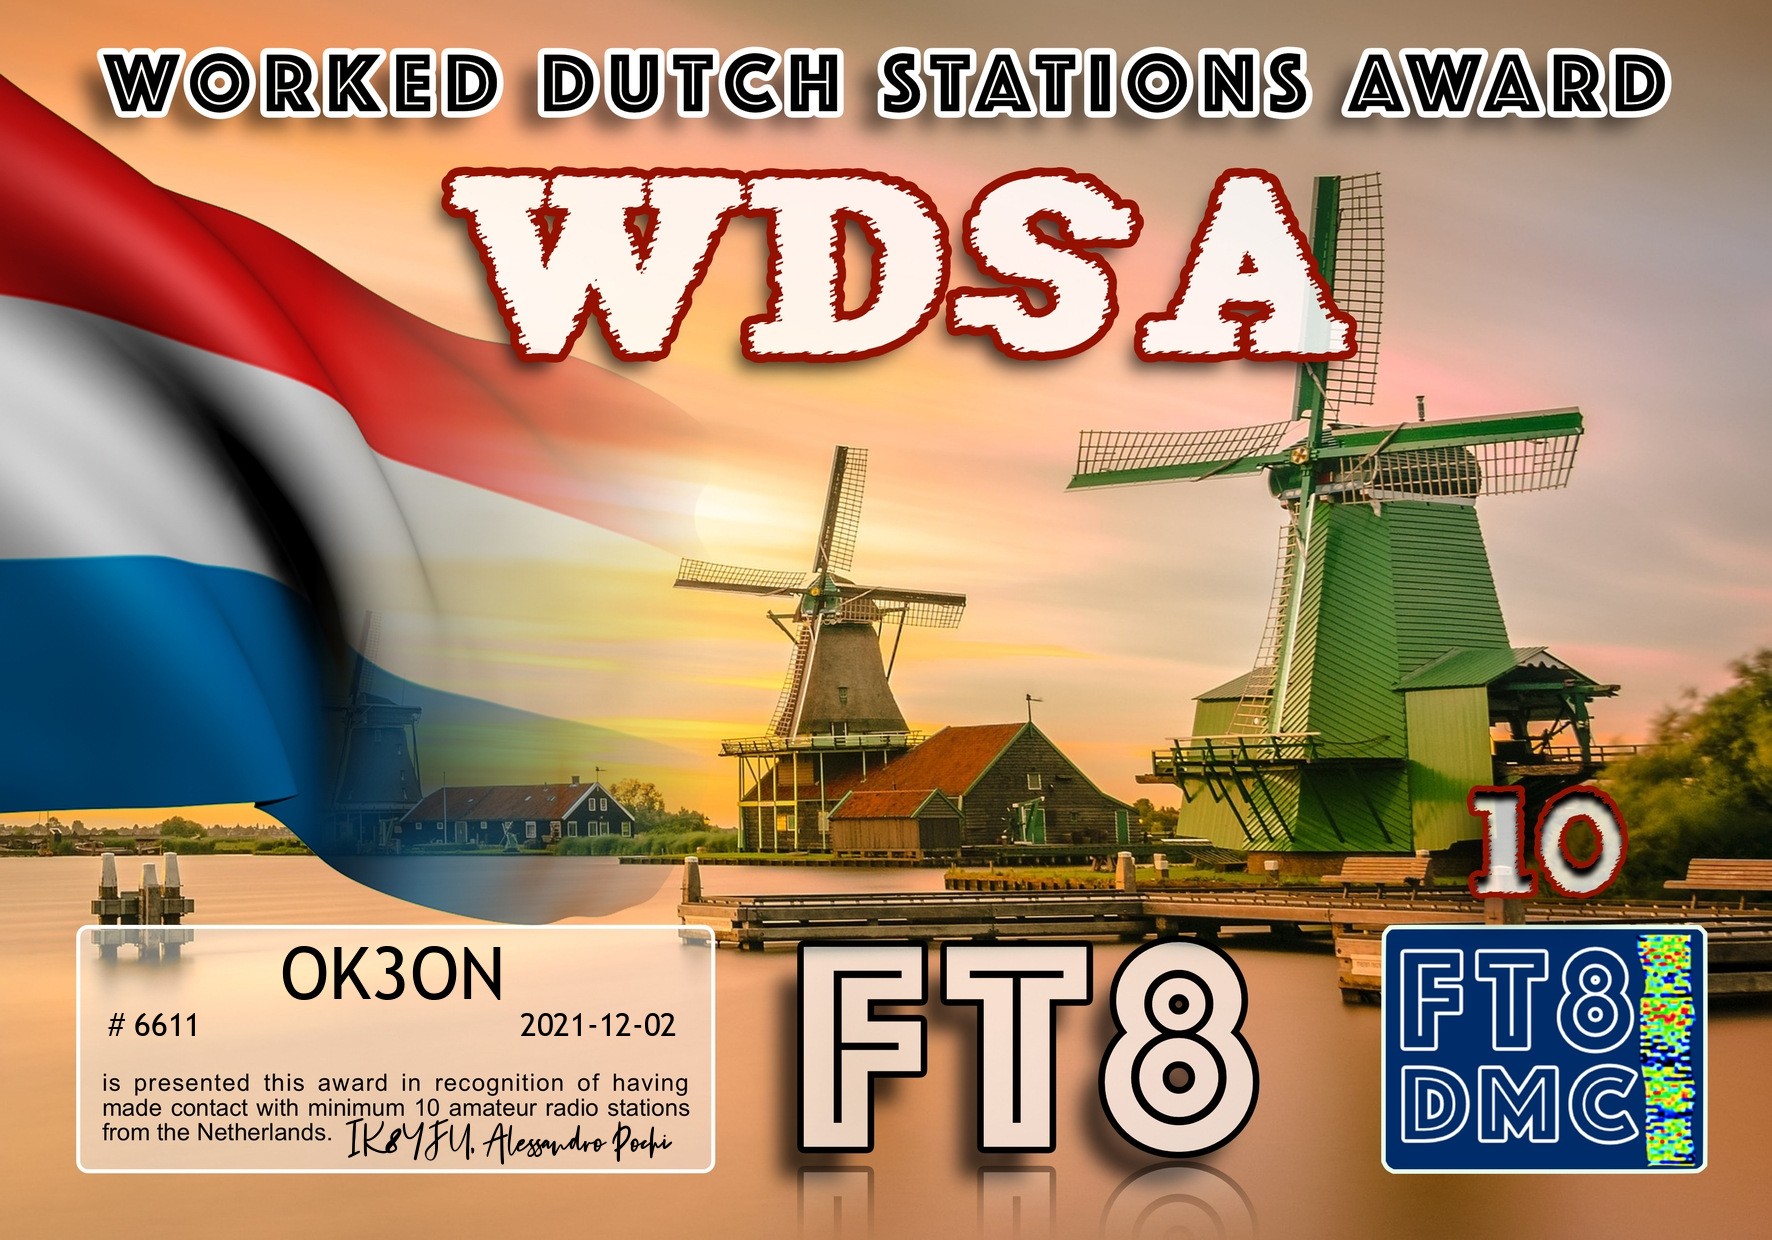 awards/OK3ON-WDSA-III_FT8DMC.jpg